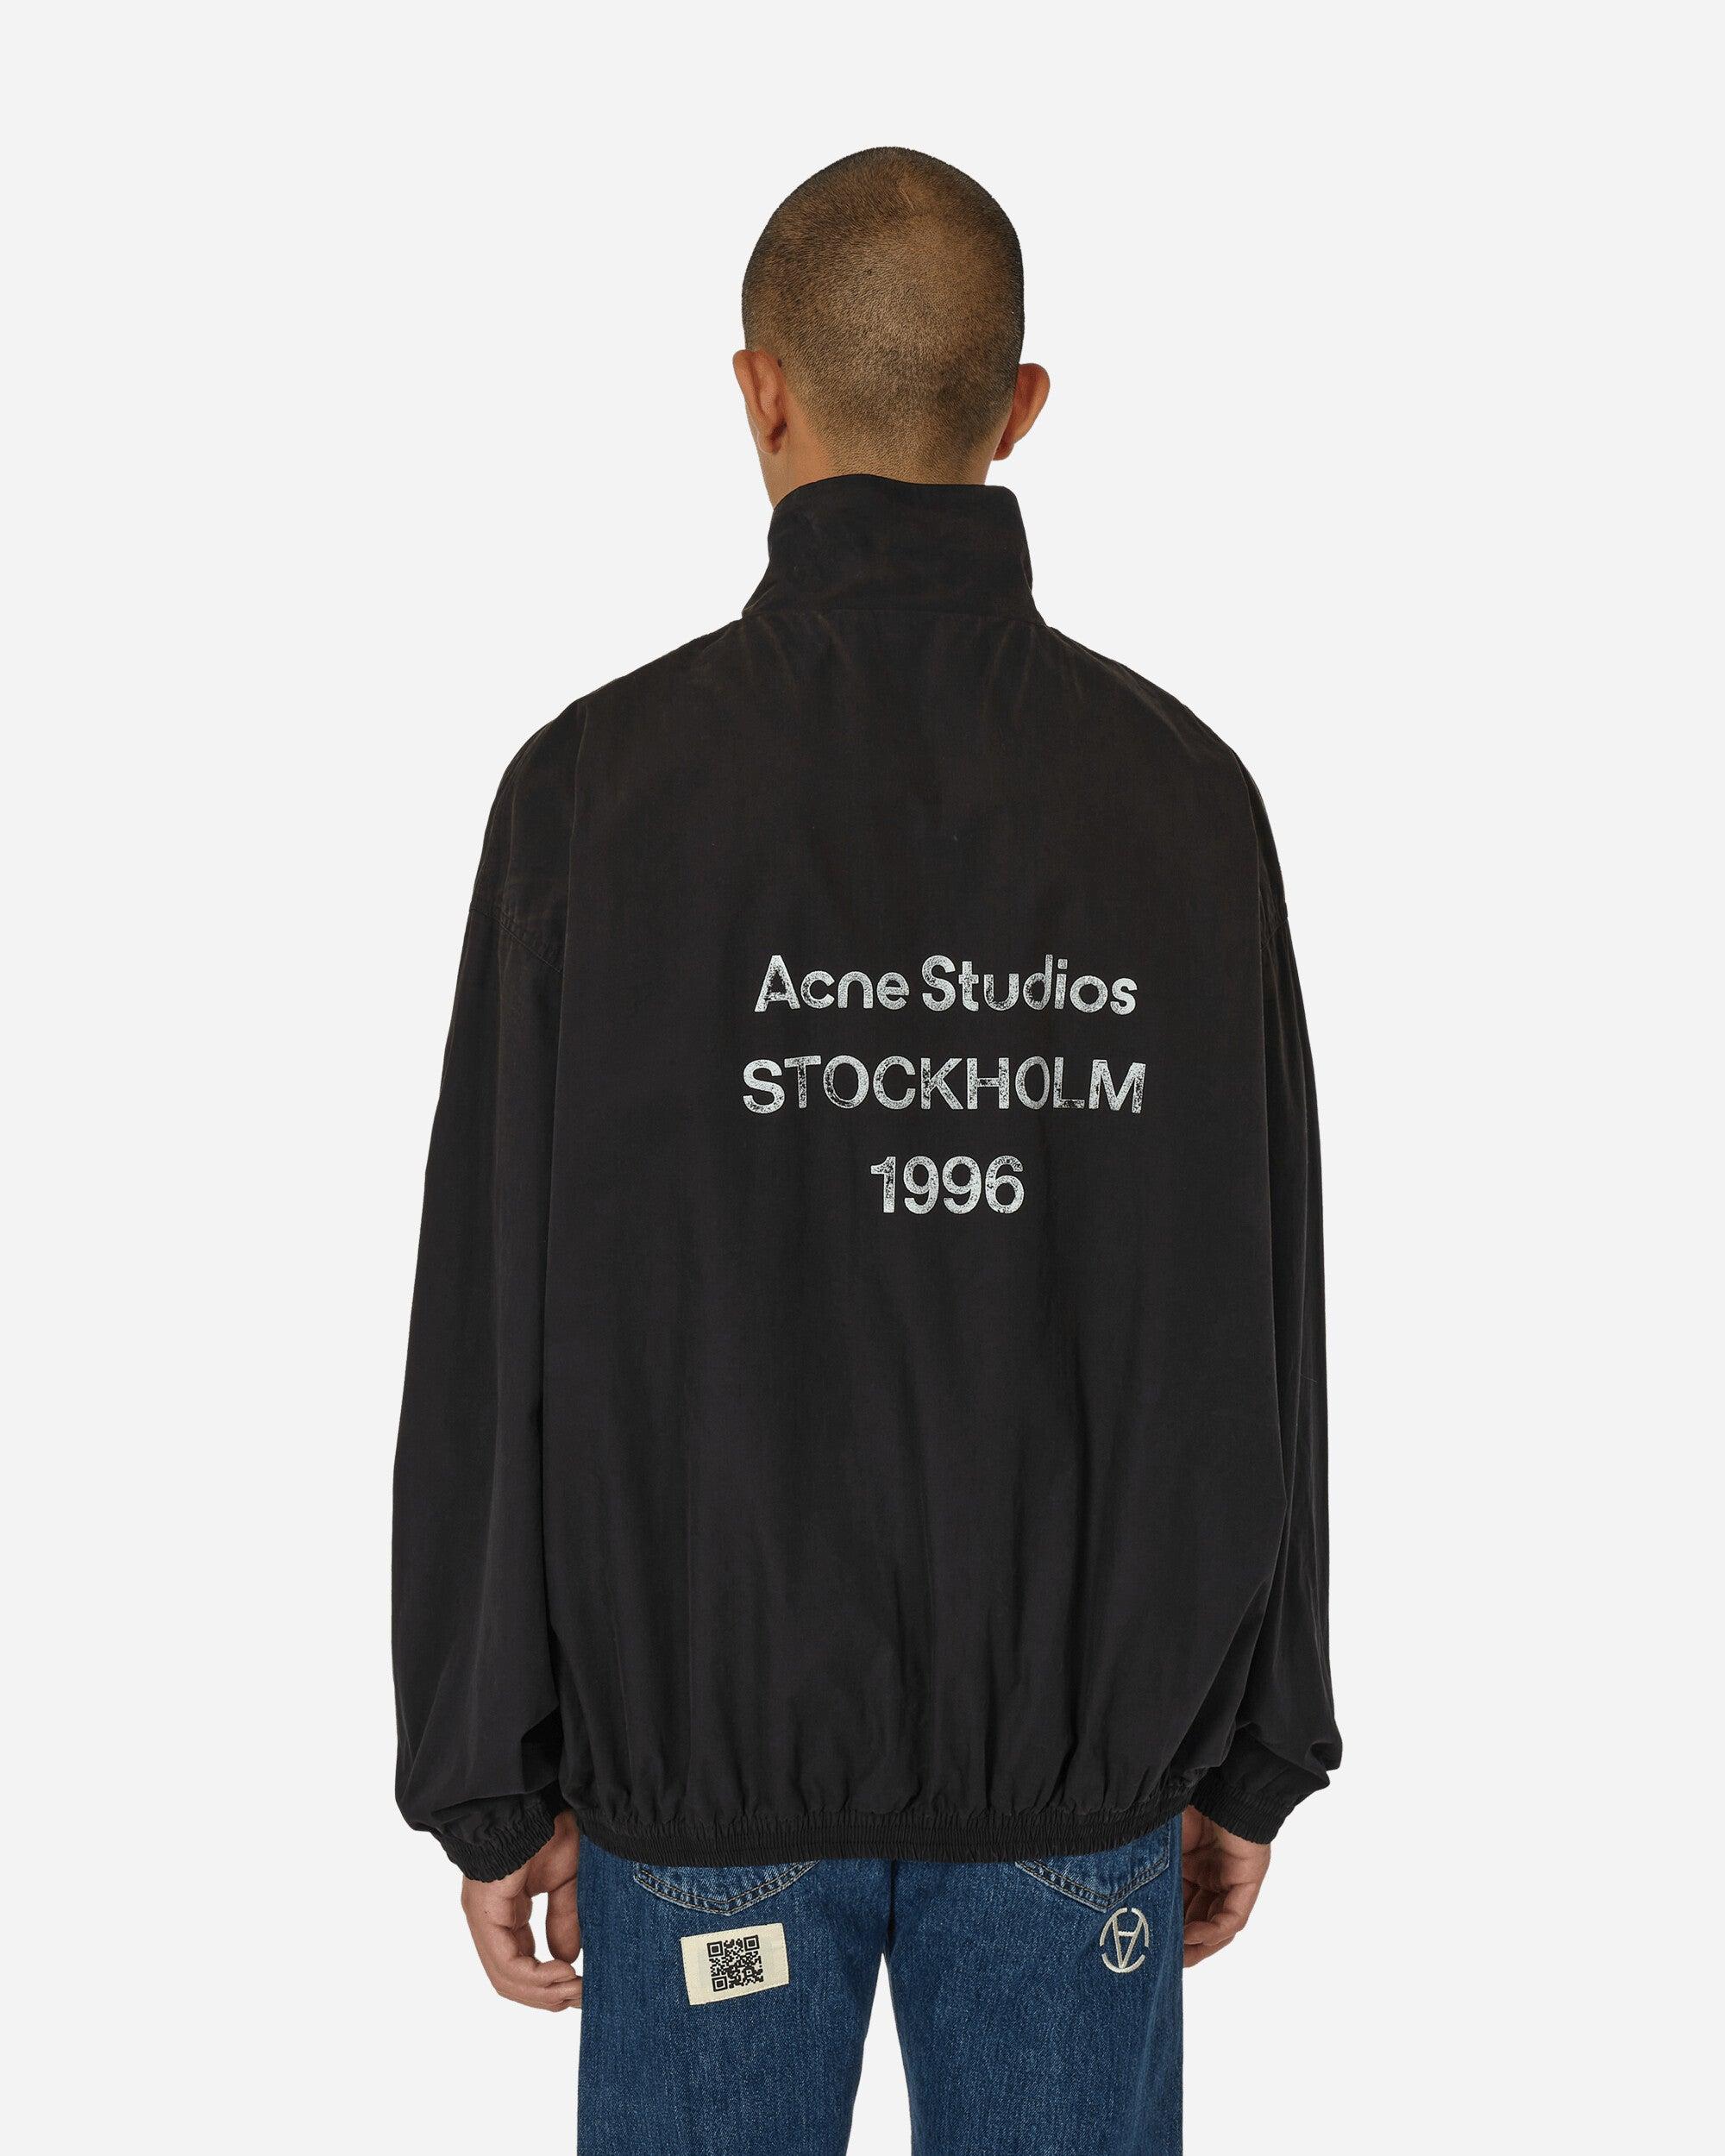 Acne Studios Logo Zipper Jacket in Black for Men | Lyst